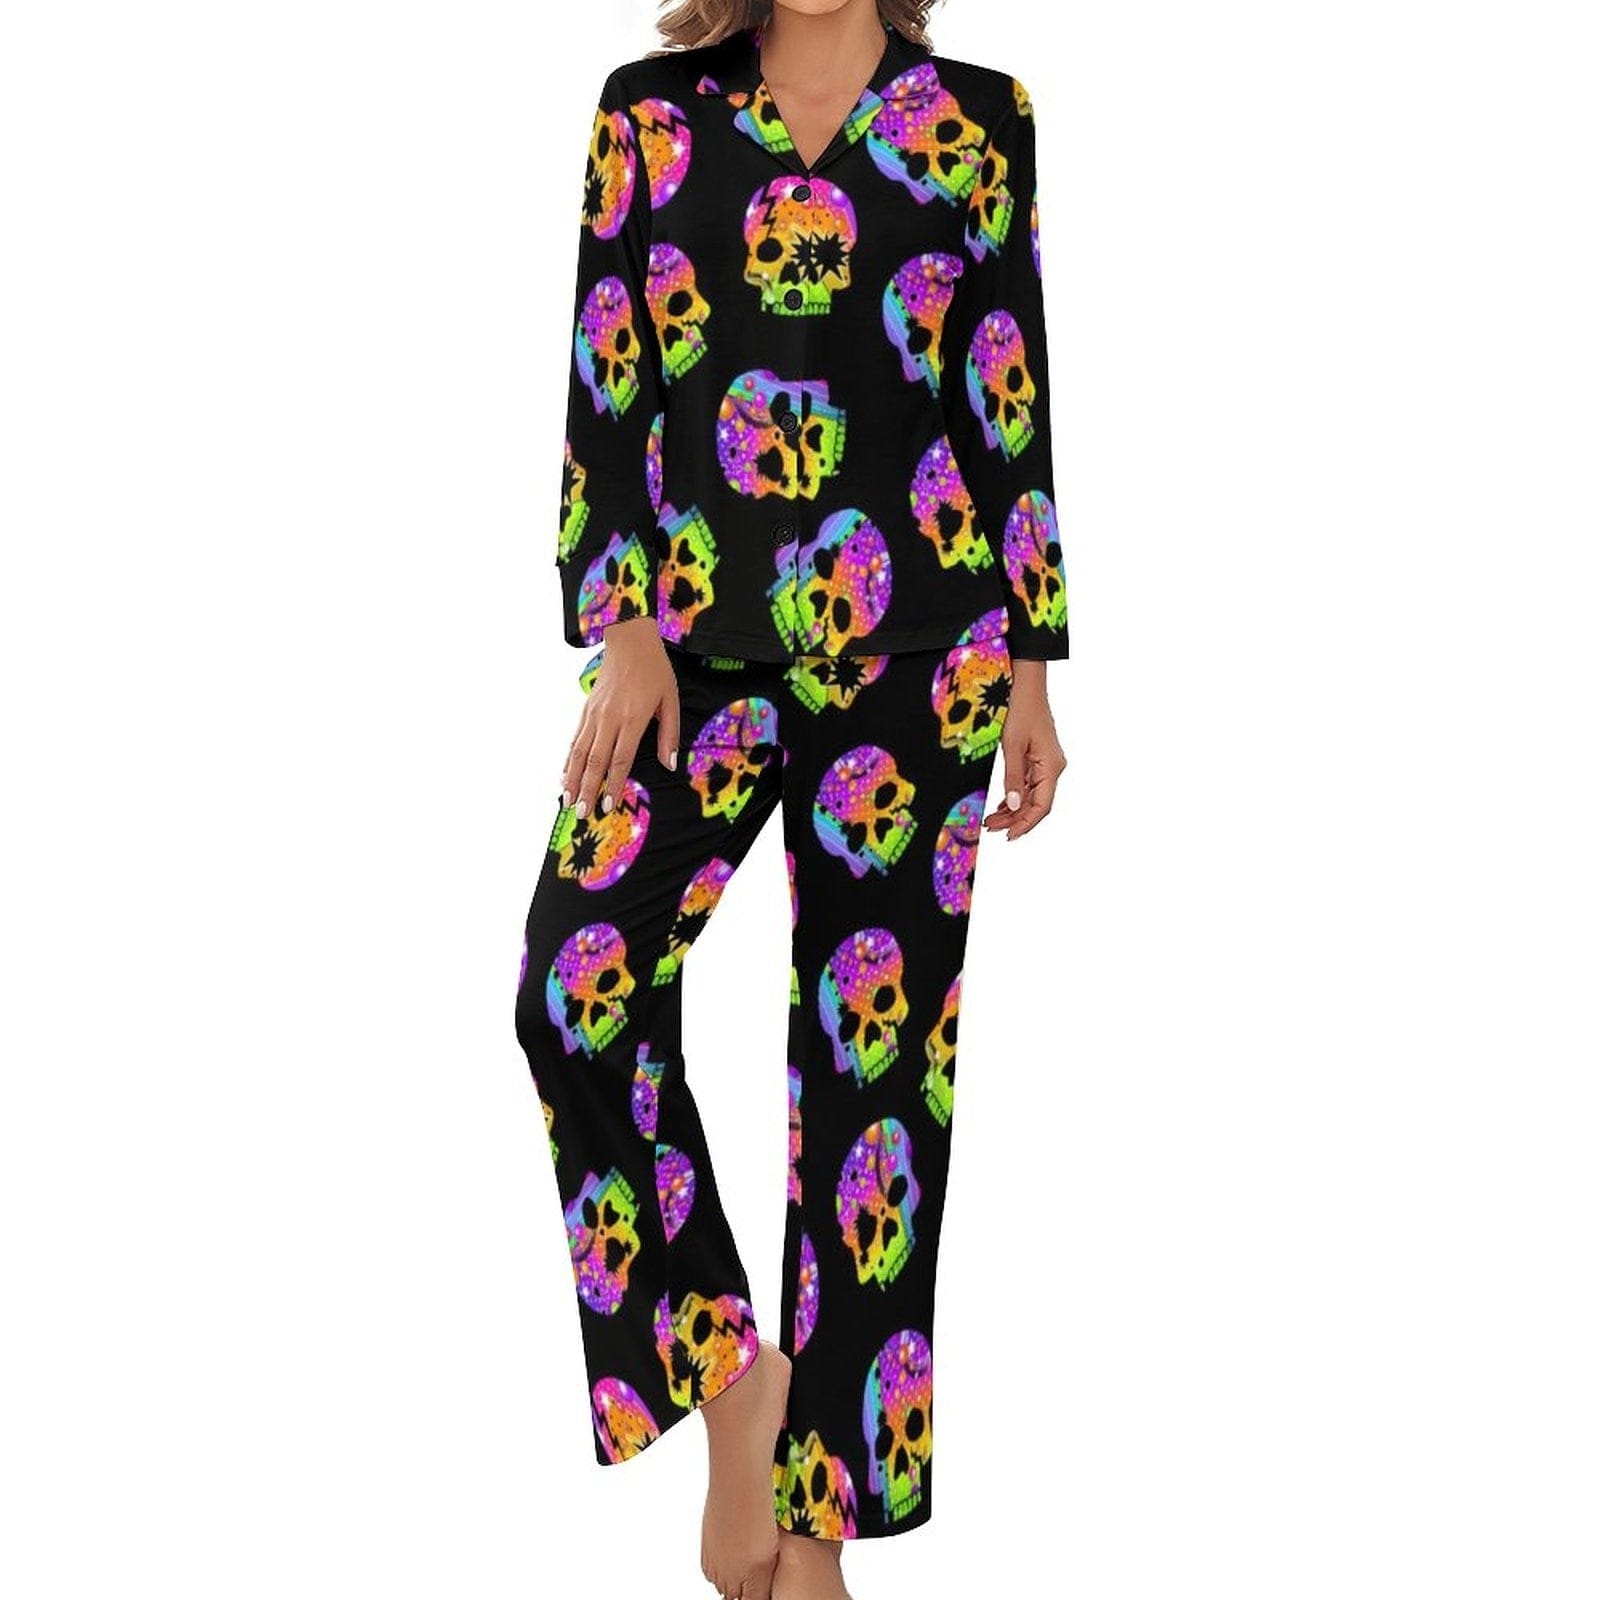 Women’s Rainbow Skull Long-Sleeve 2 Piece Sleepwear Pajama Set